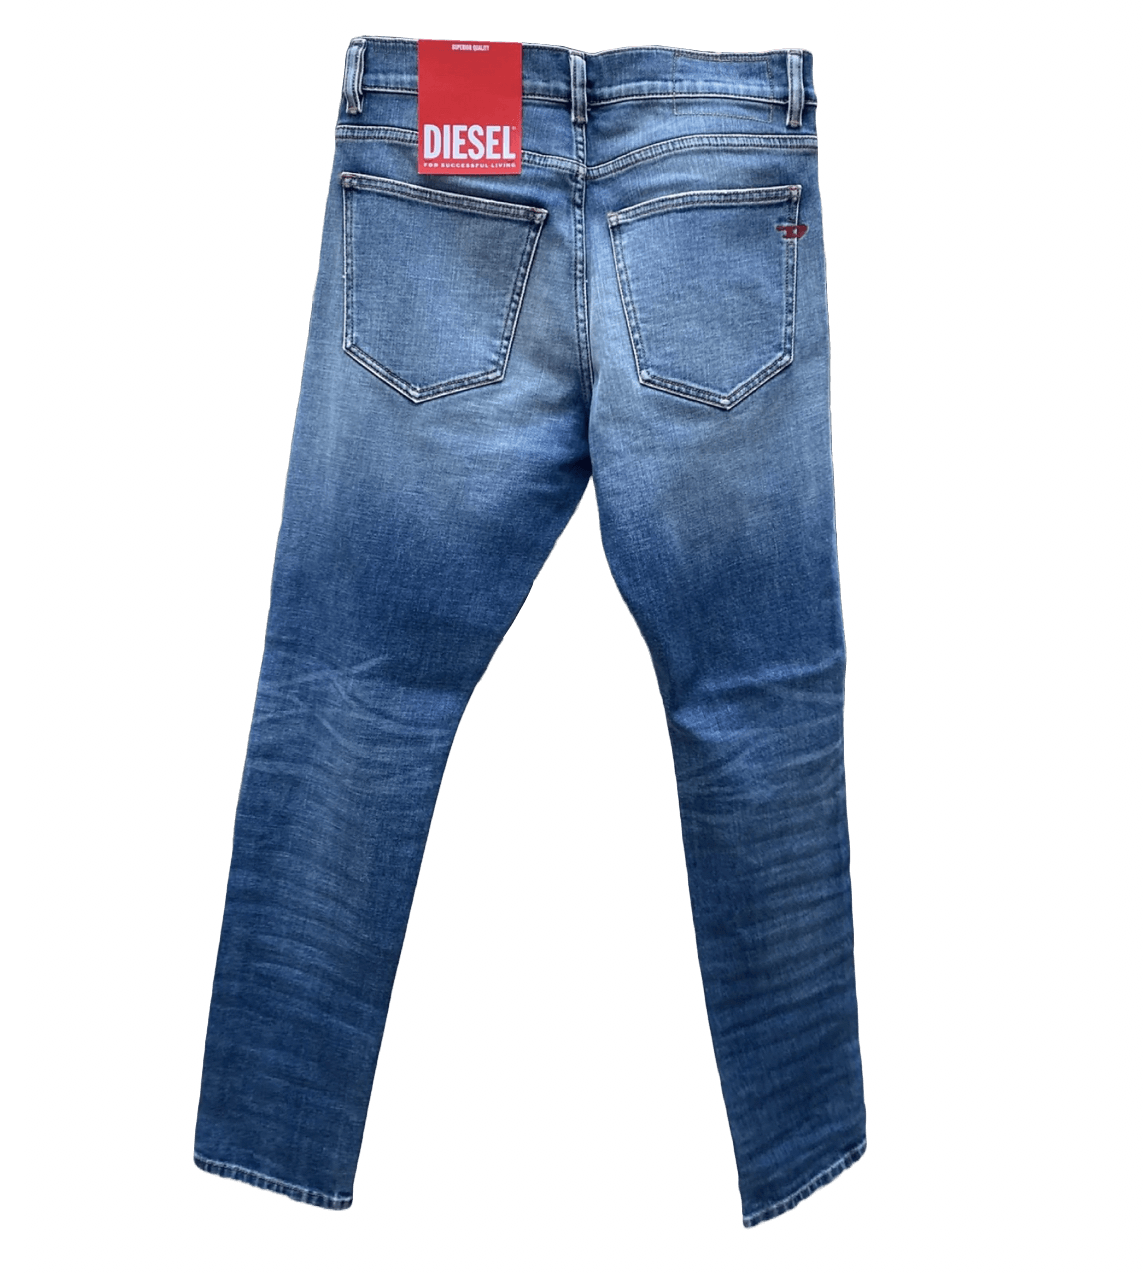 A pair of light blue DIESEL D-STRUKT 9C87 DENIM jeans with a label on the back.